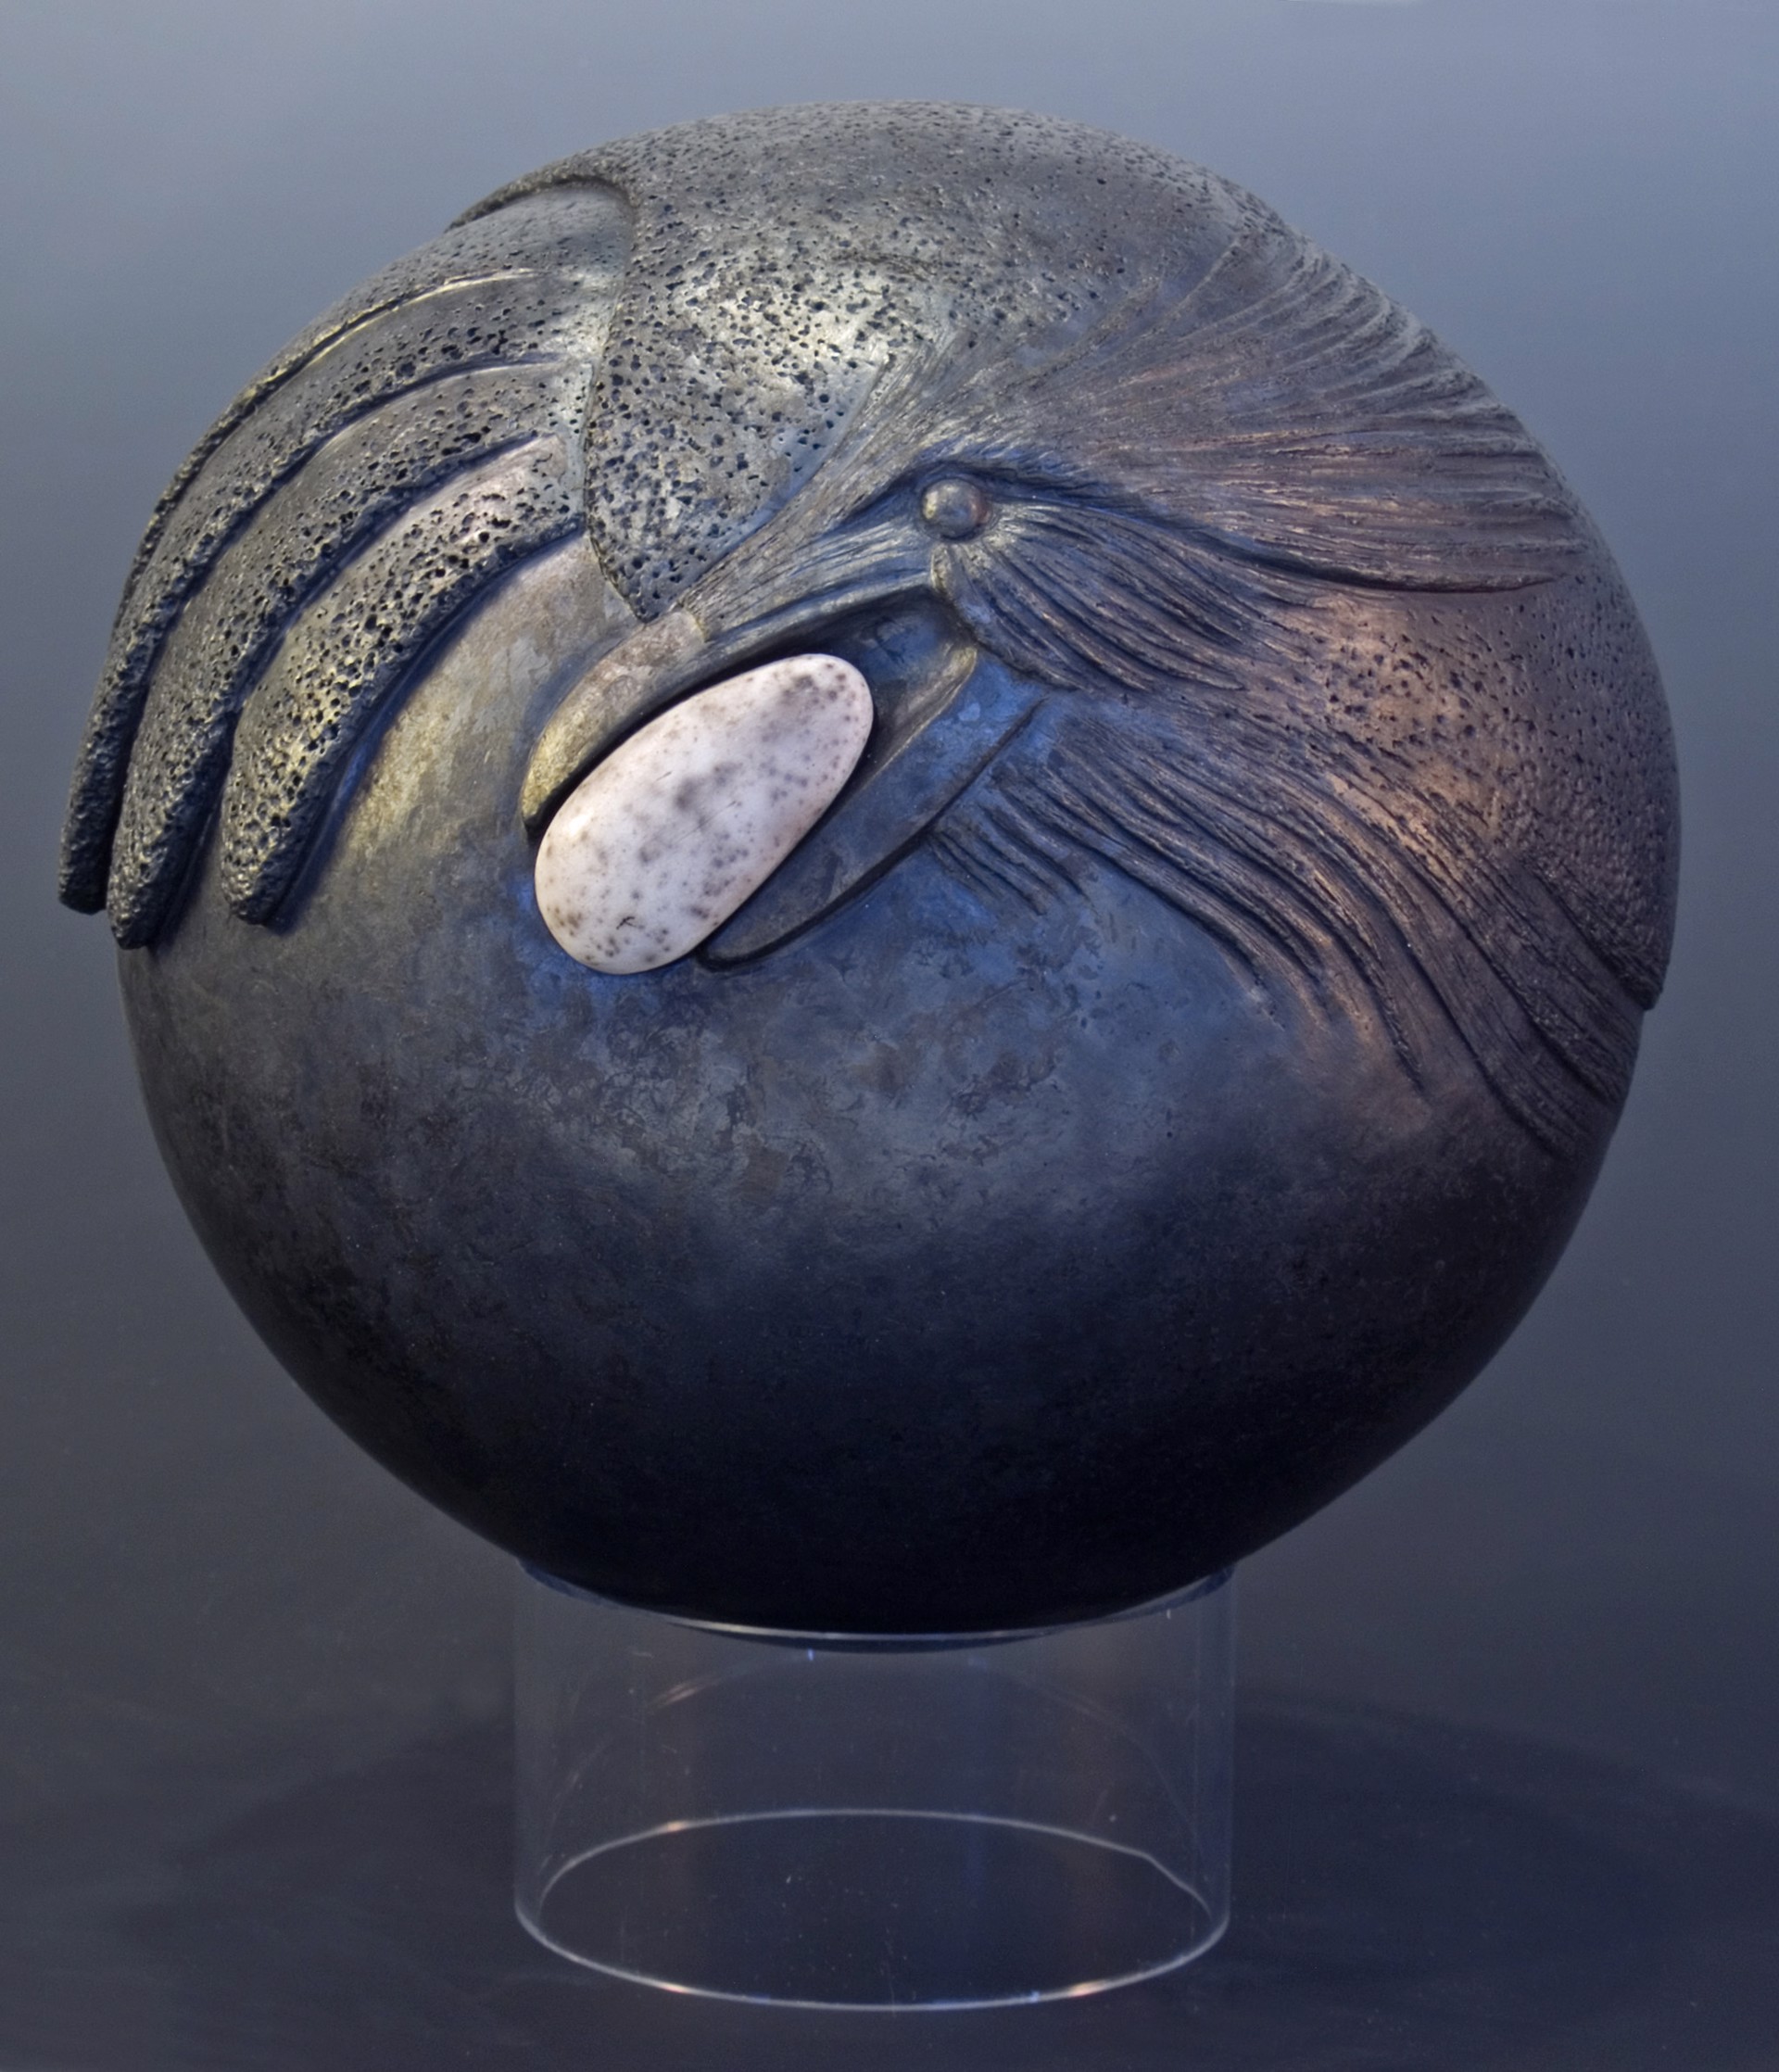 Raven with Egg by Pat & Ken Larson